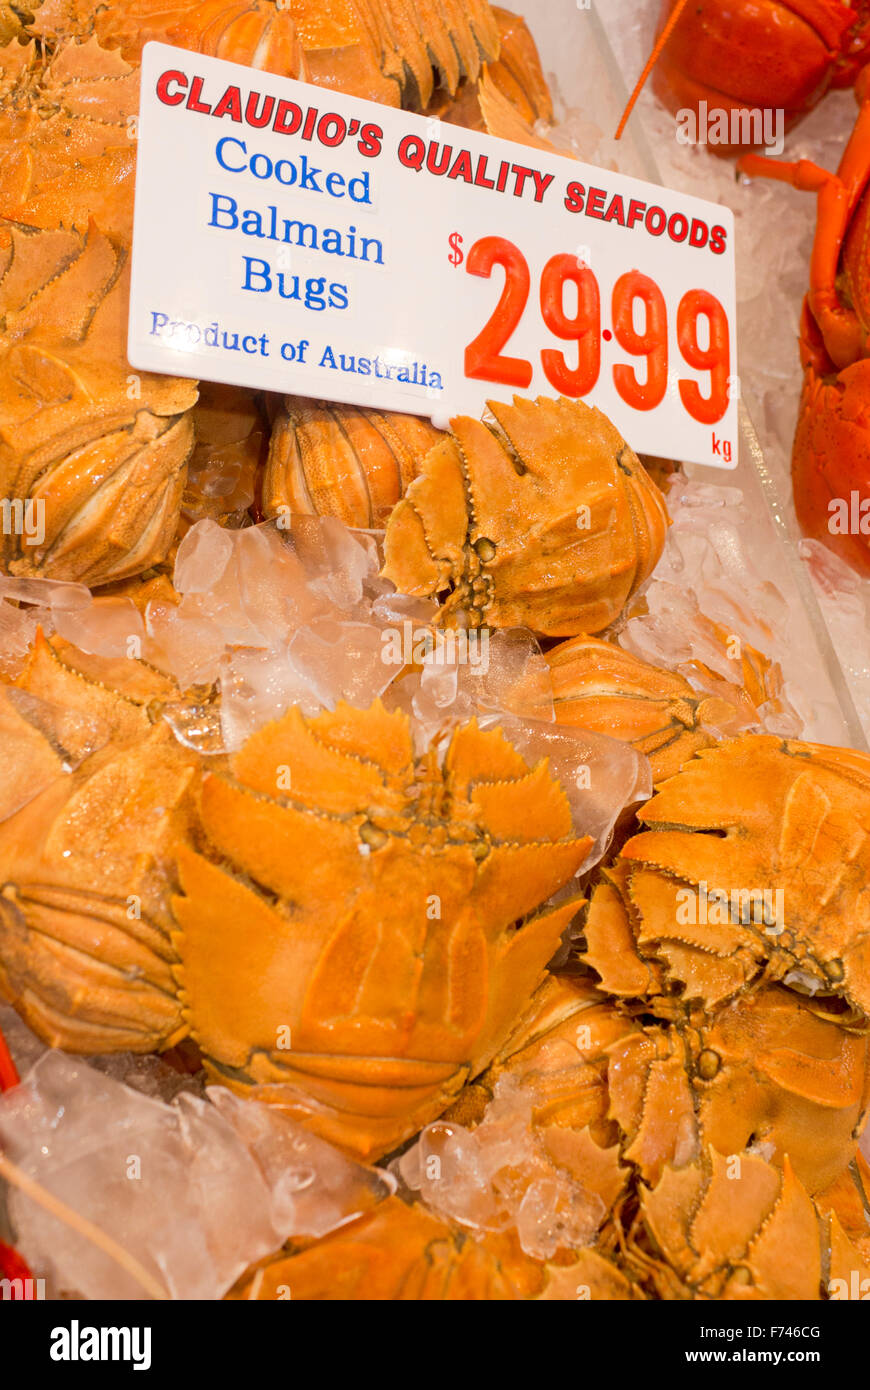 Balmain bugs for sale on stall at Sydney Fish Market NSW Australia Stock Photo